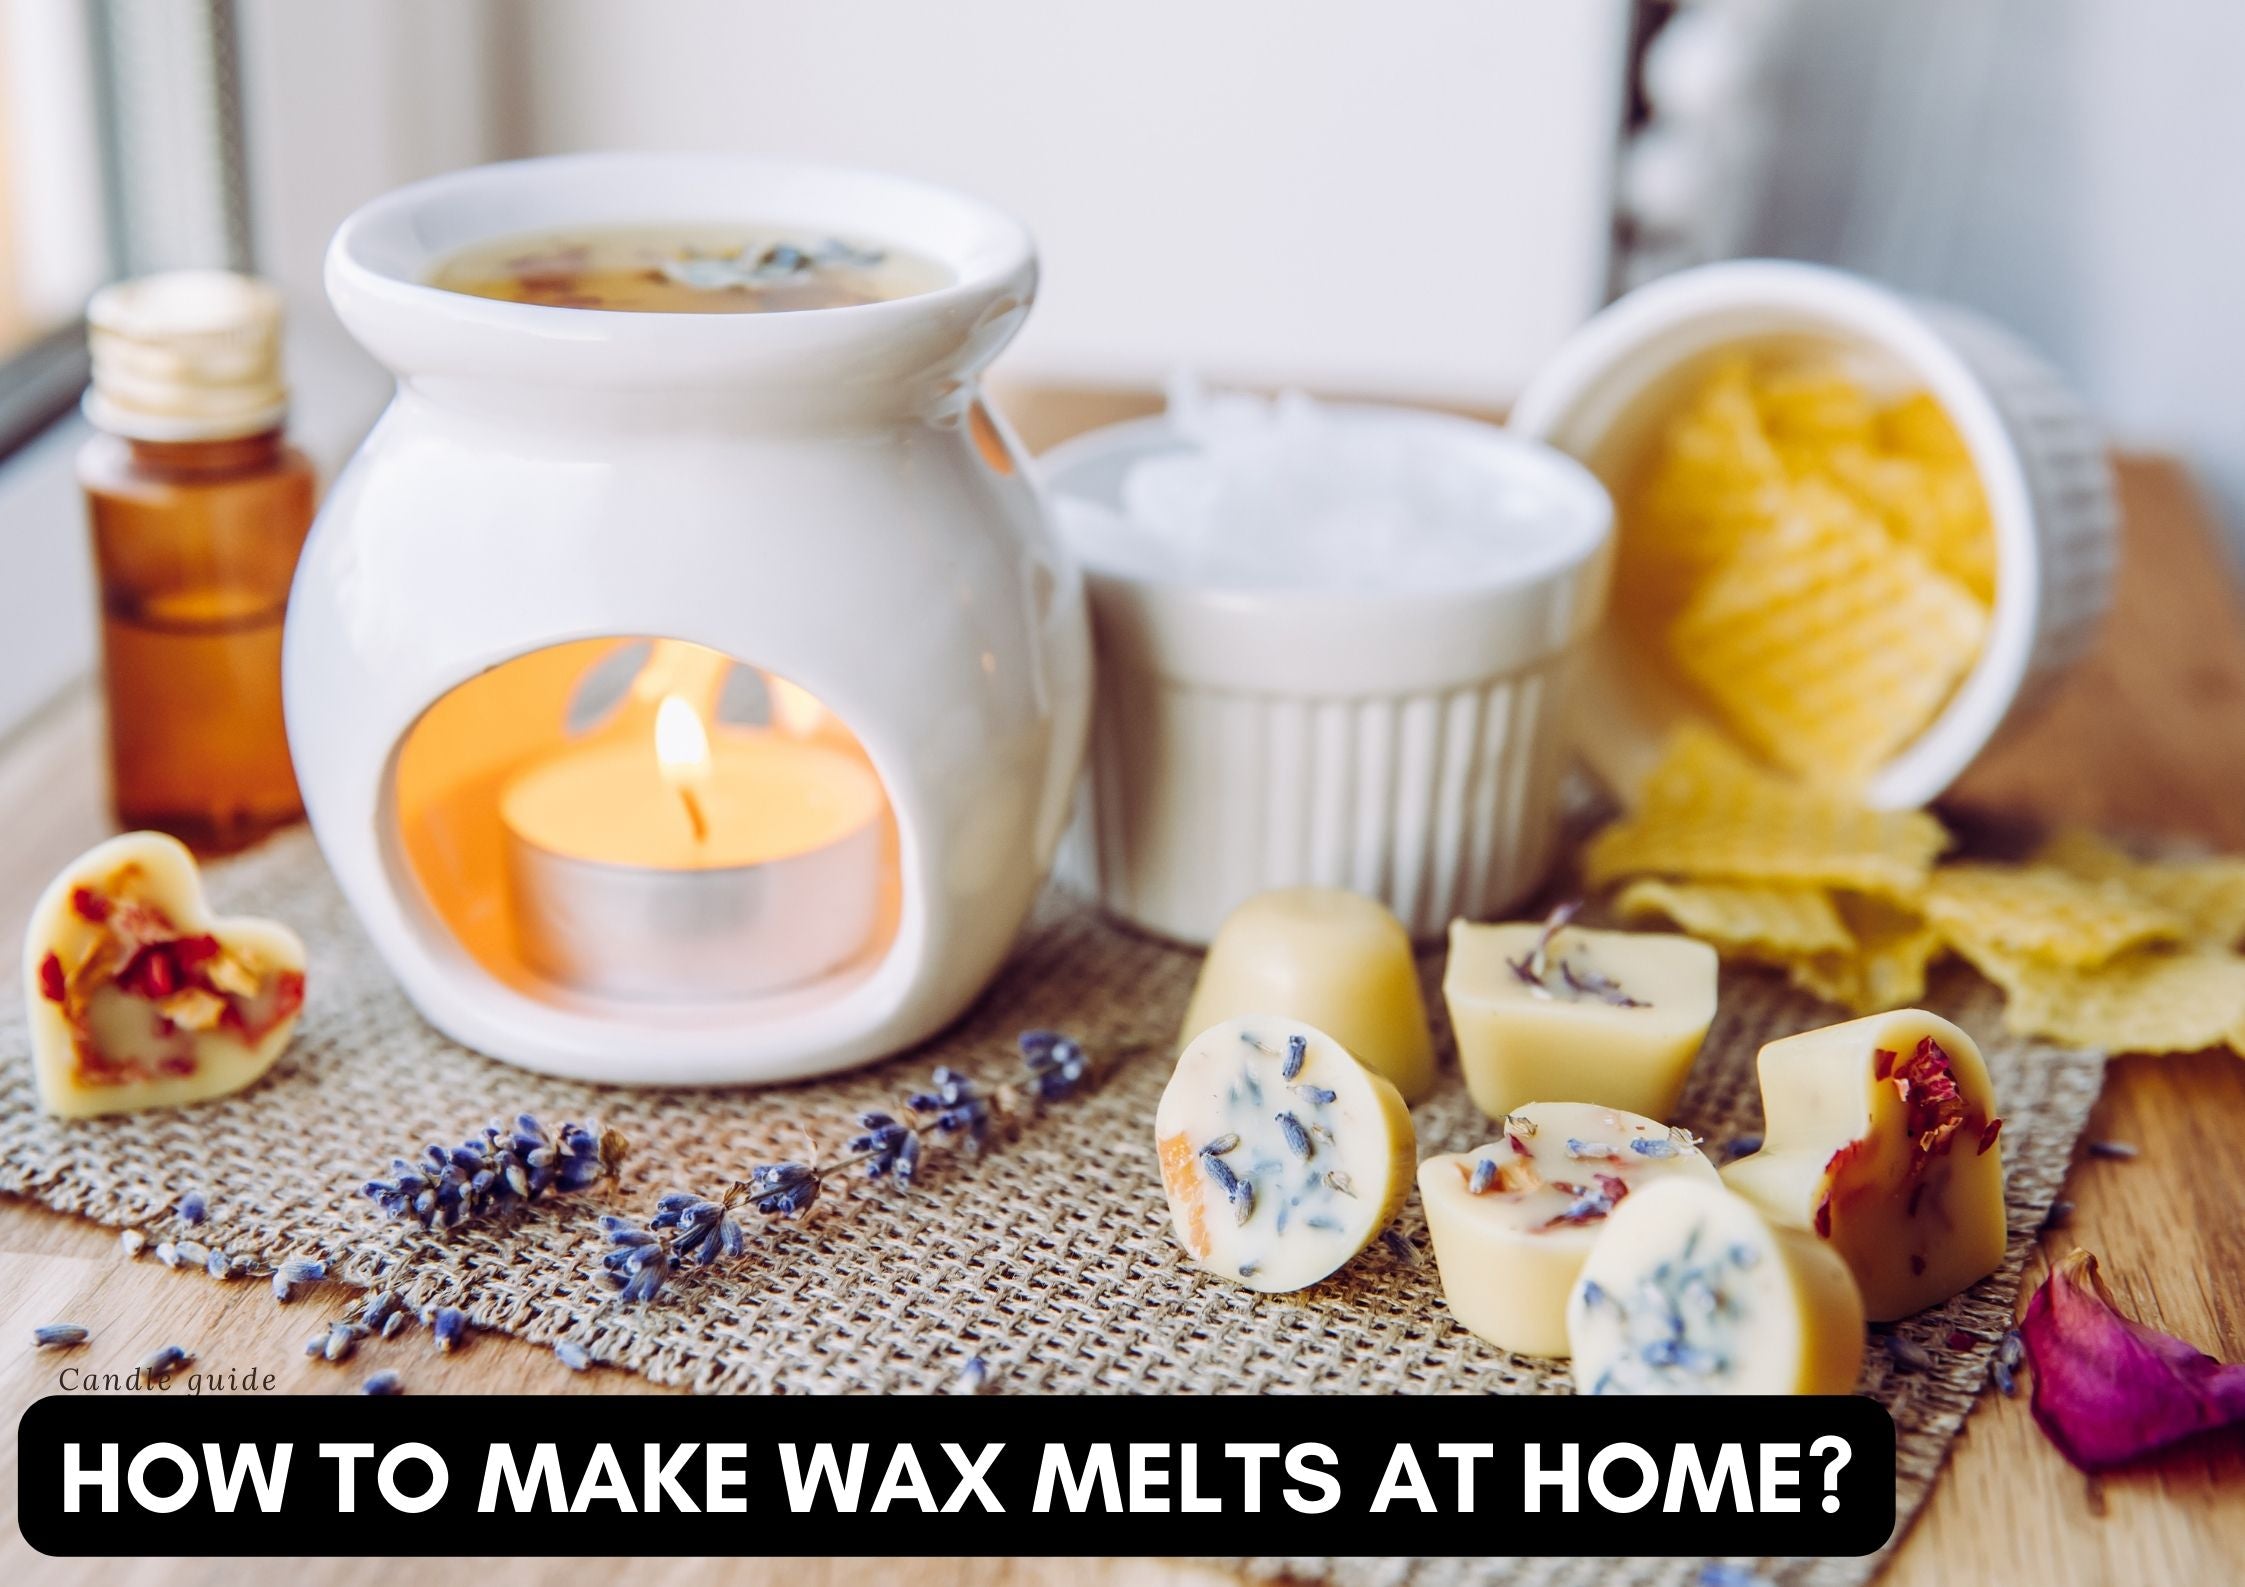 How to make wax melts at home?